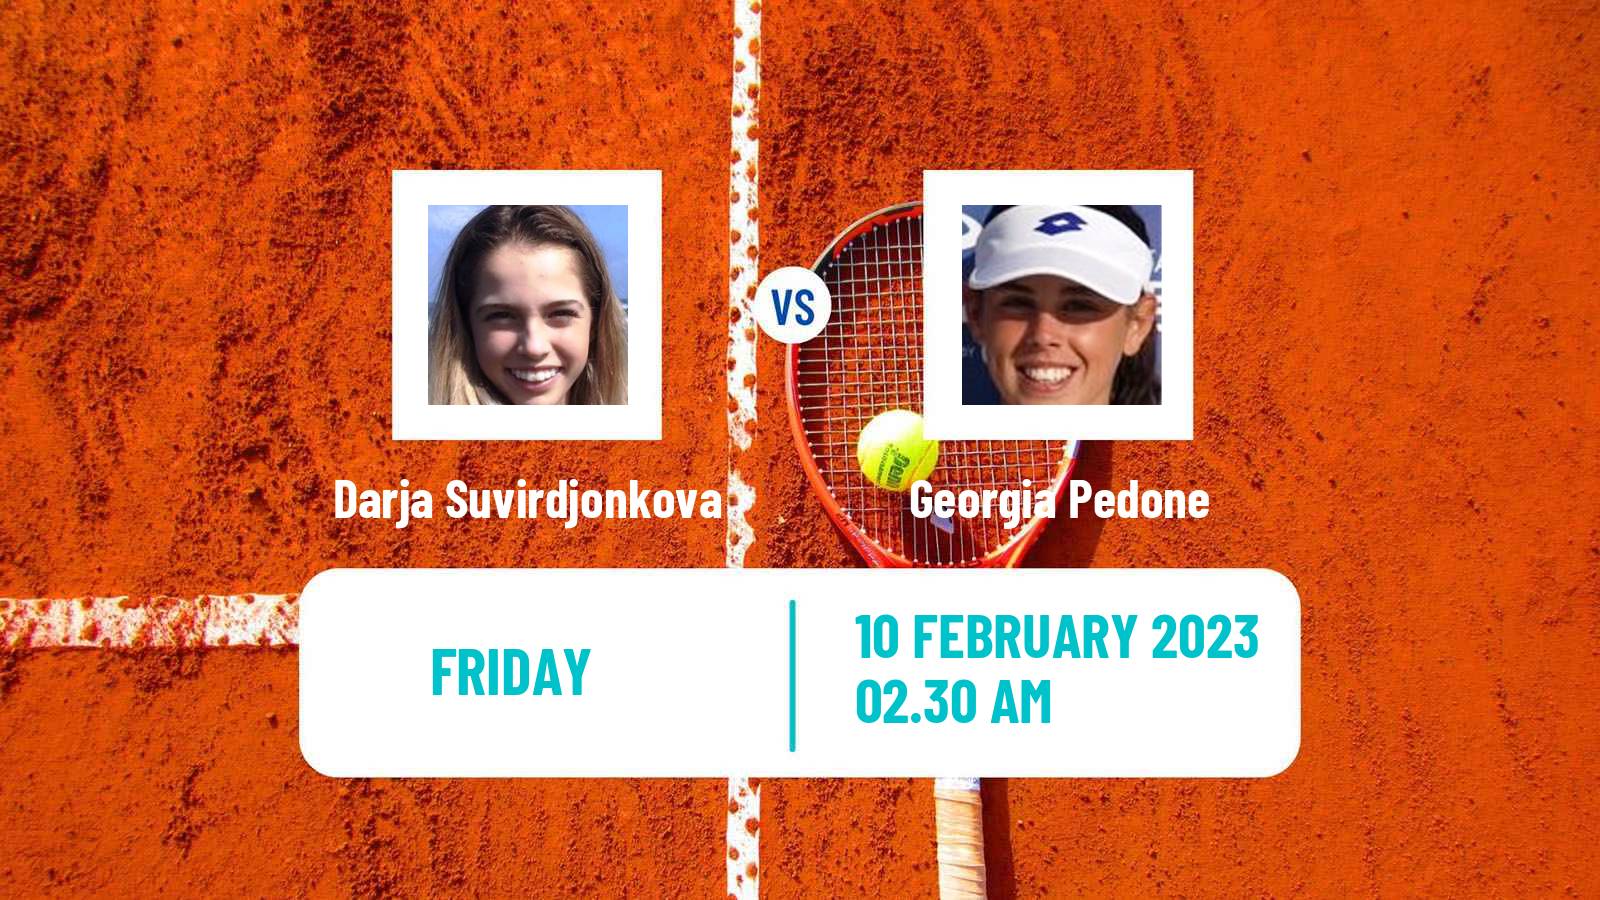 Tennis ITF Tournaments Darja Suvirdjonkova - Georgia Pedone